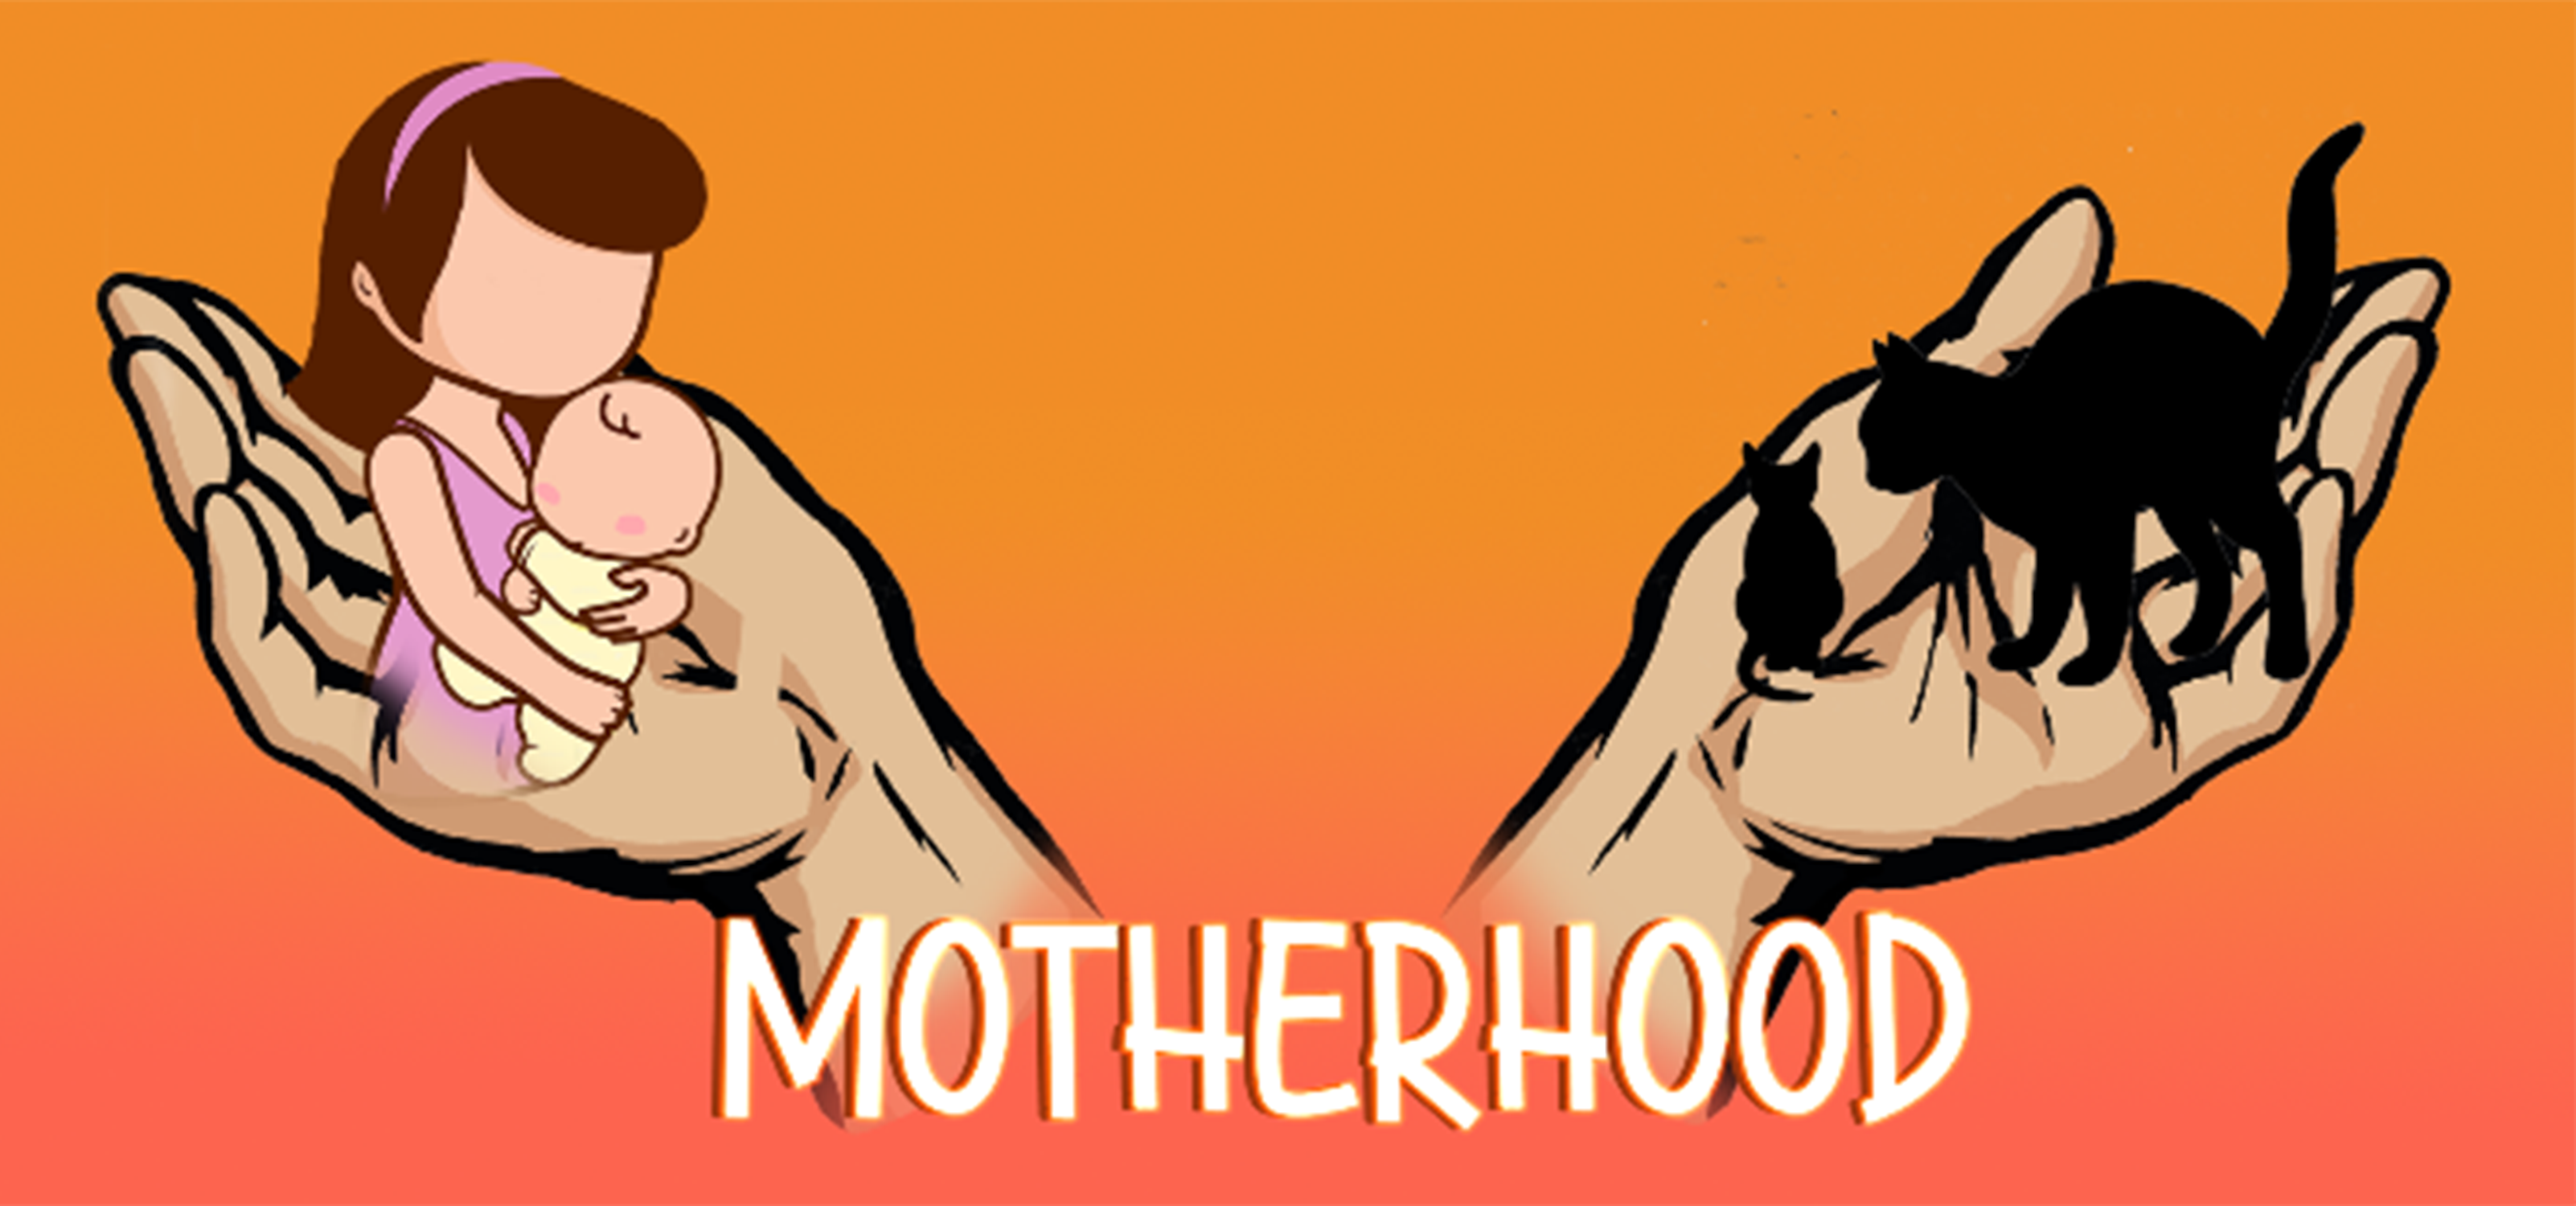 Motherhood (Dissertation Artifact)